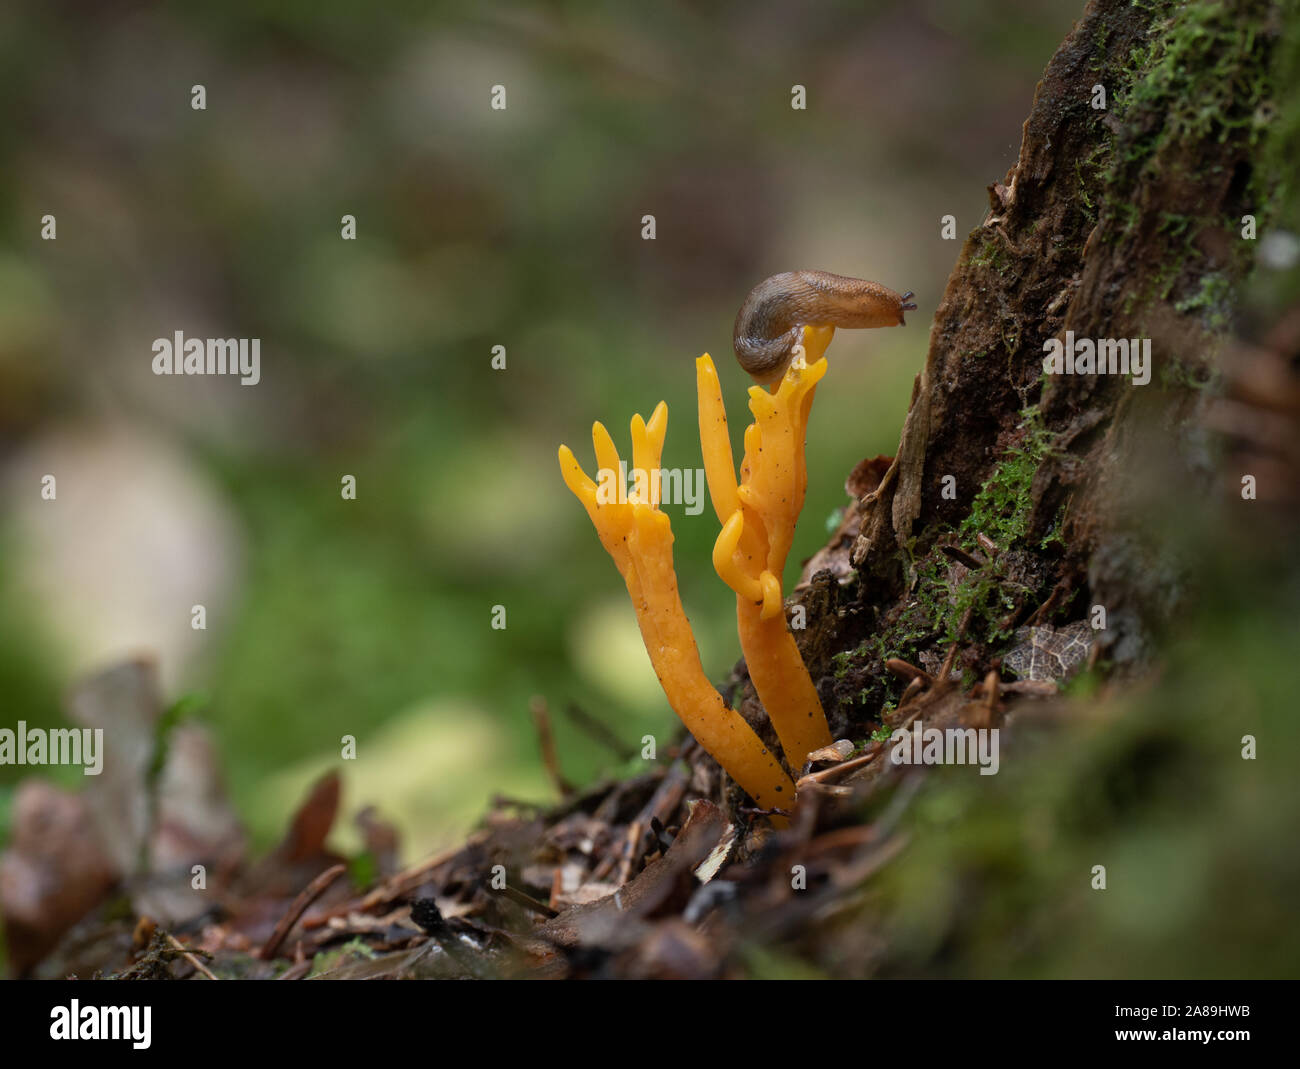 Slug crawling on Calocera viscosa mushroom Stock Photo